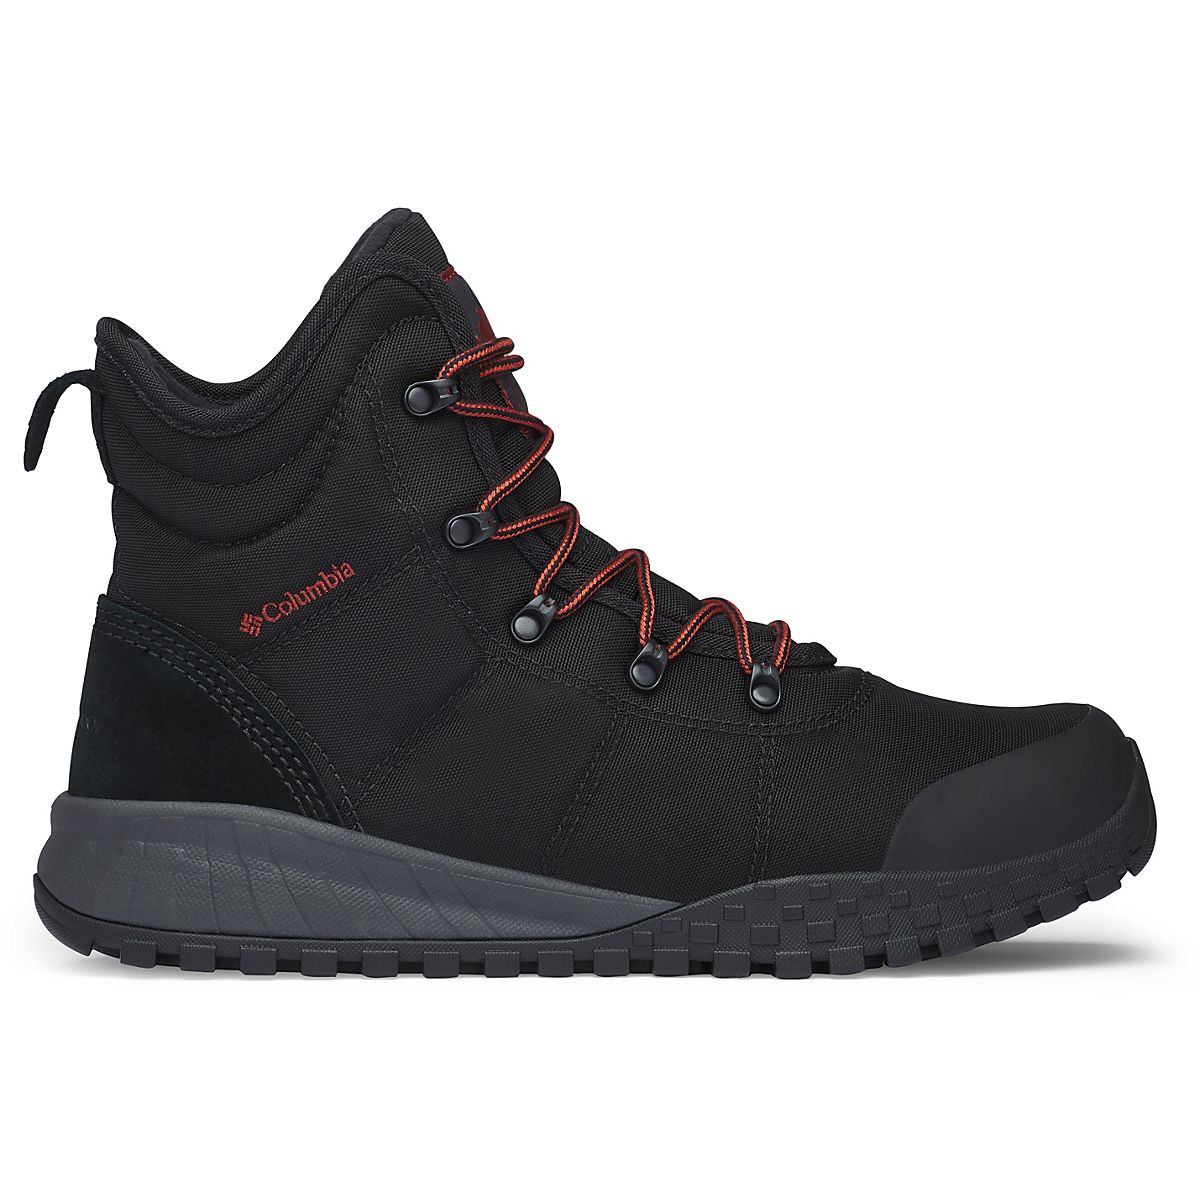 Columbia Men's Fairbanks Omni-Heat Hiking Boots (Black) $45.48 + Free Shipping